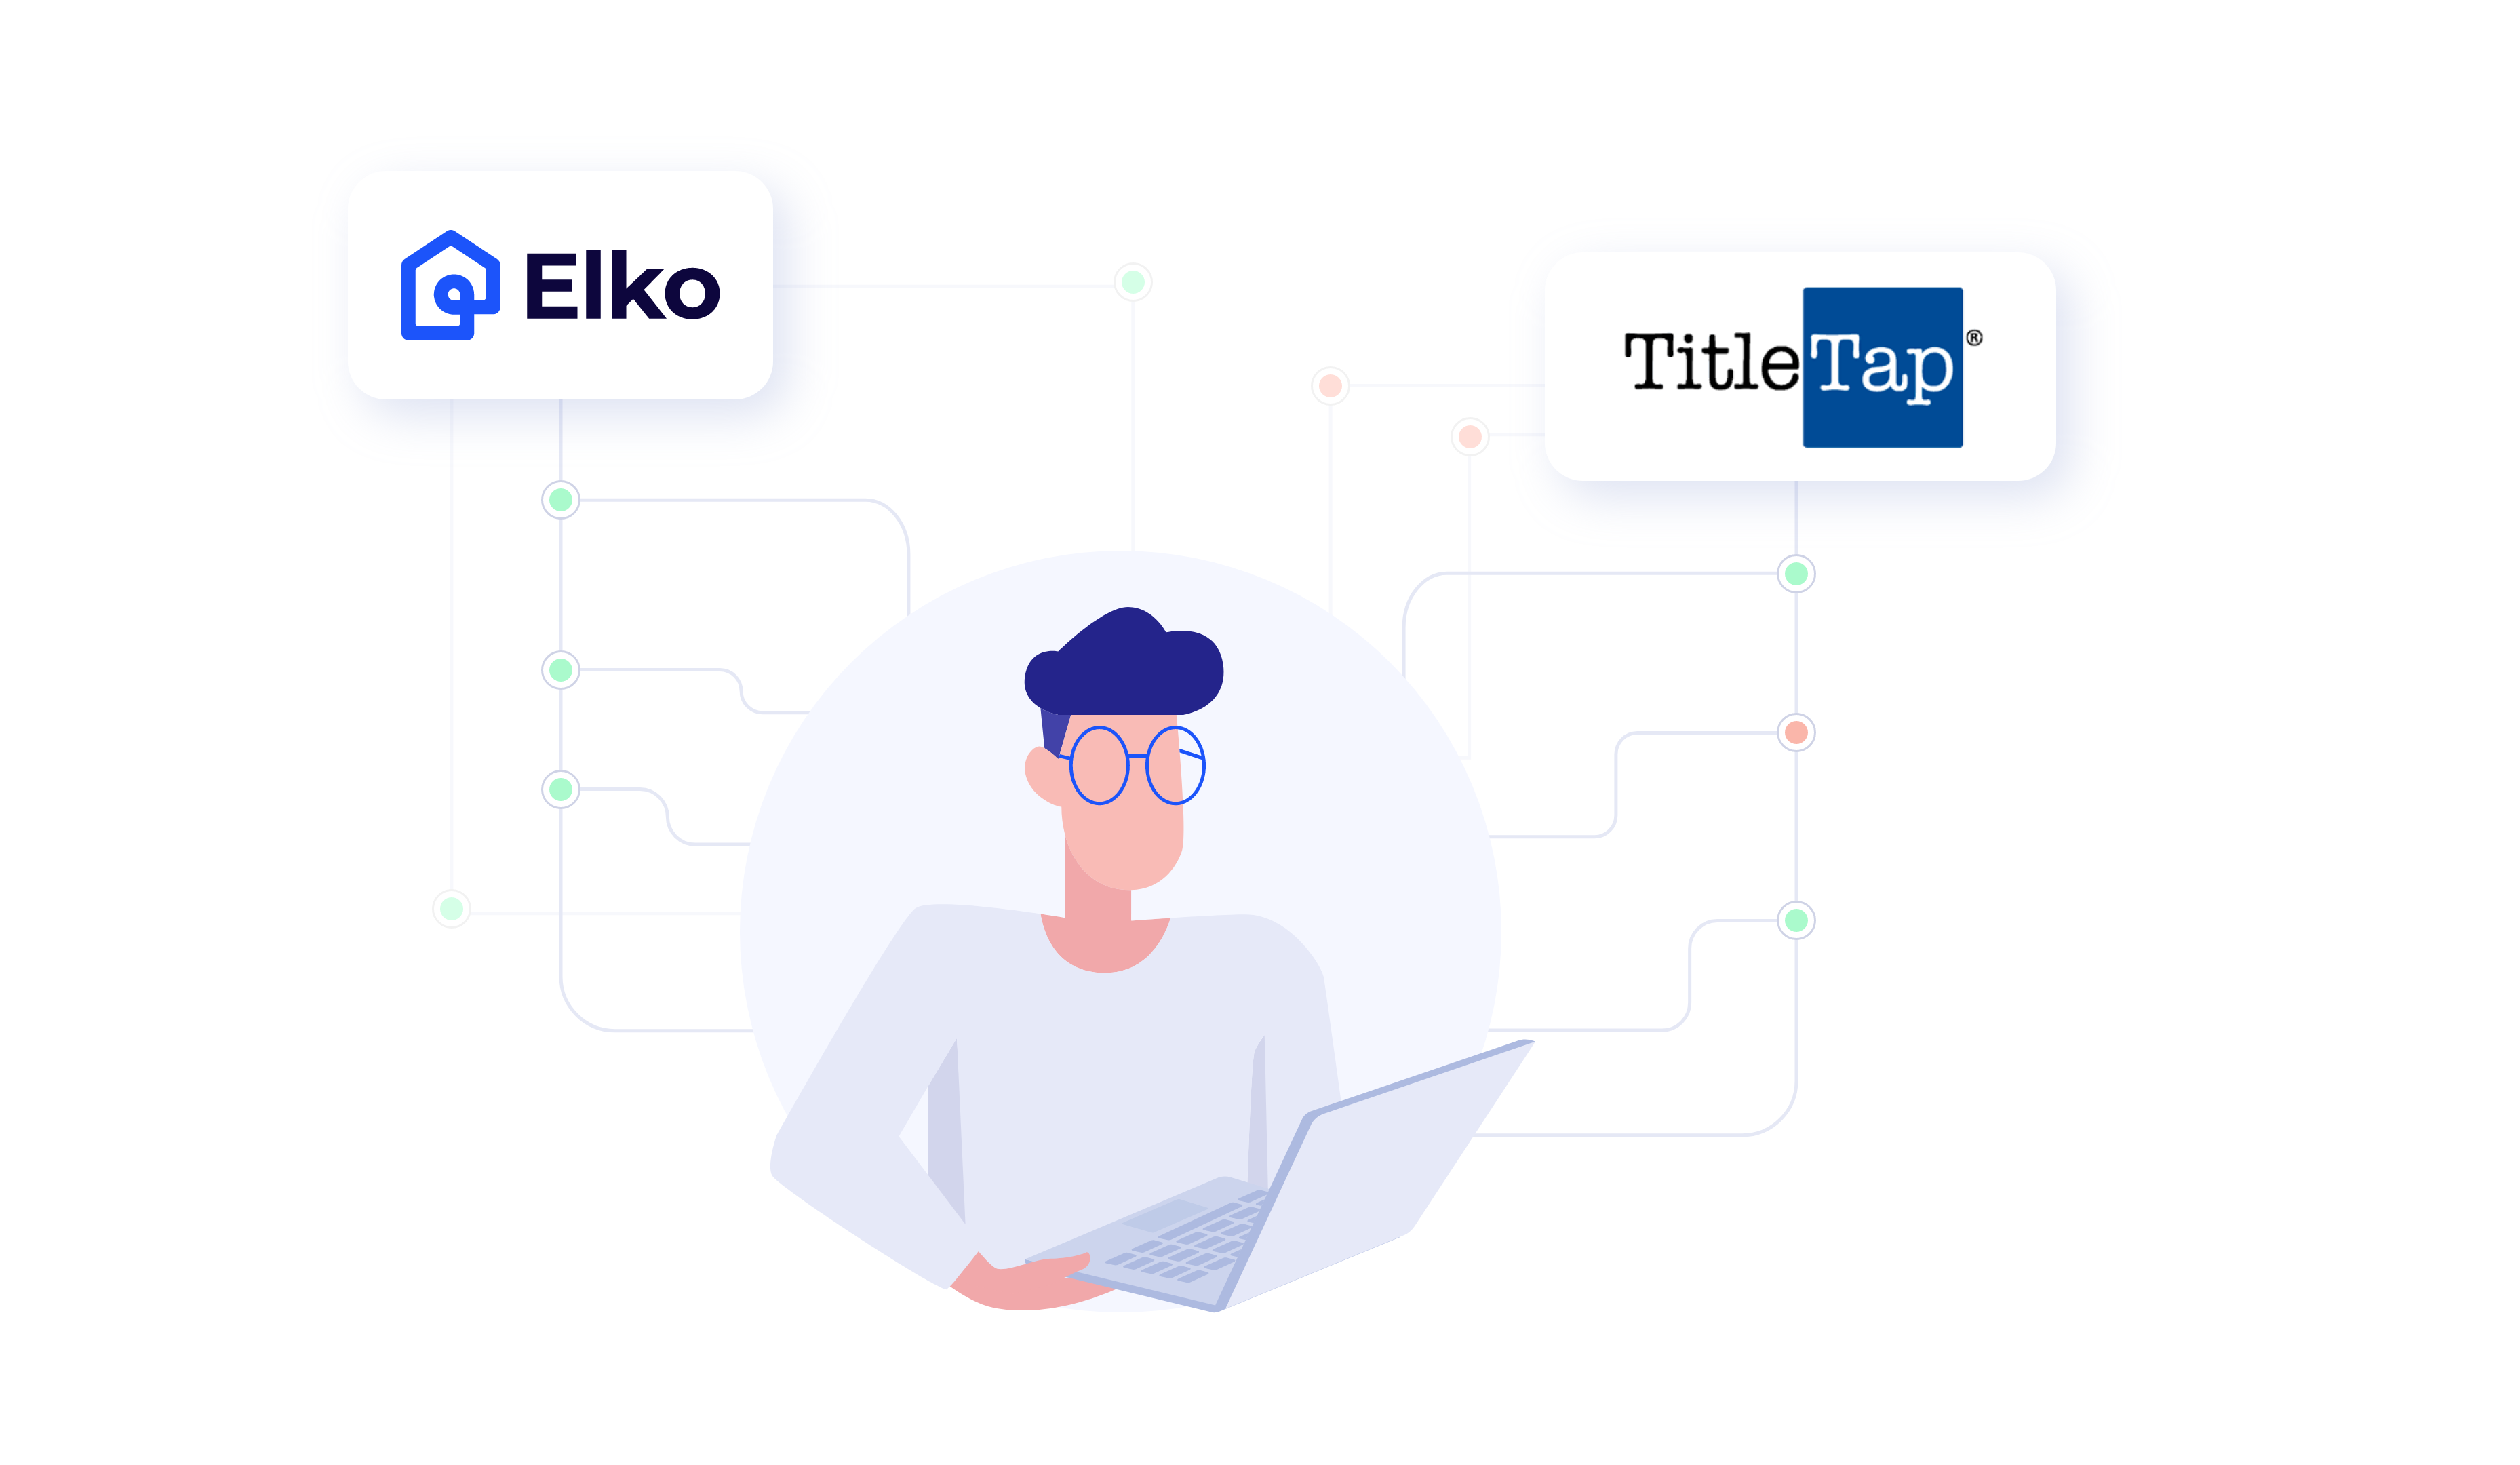 Elko vs. TitleTap